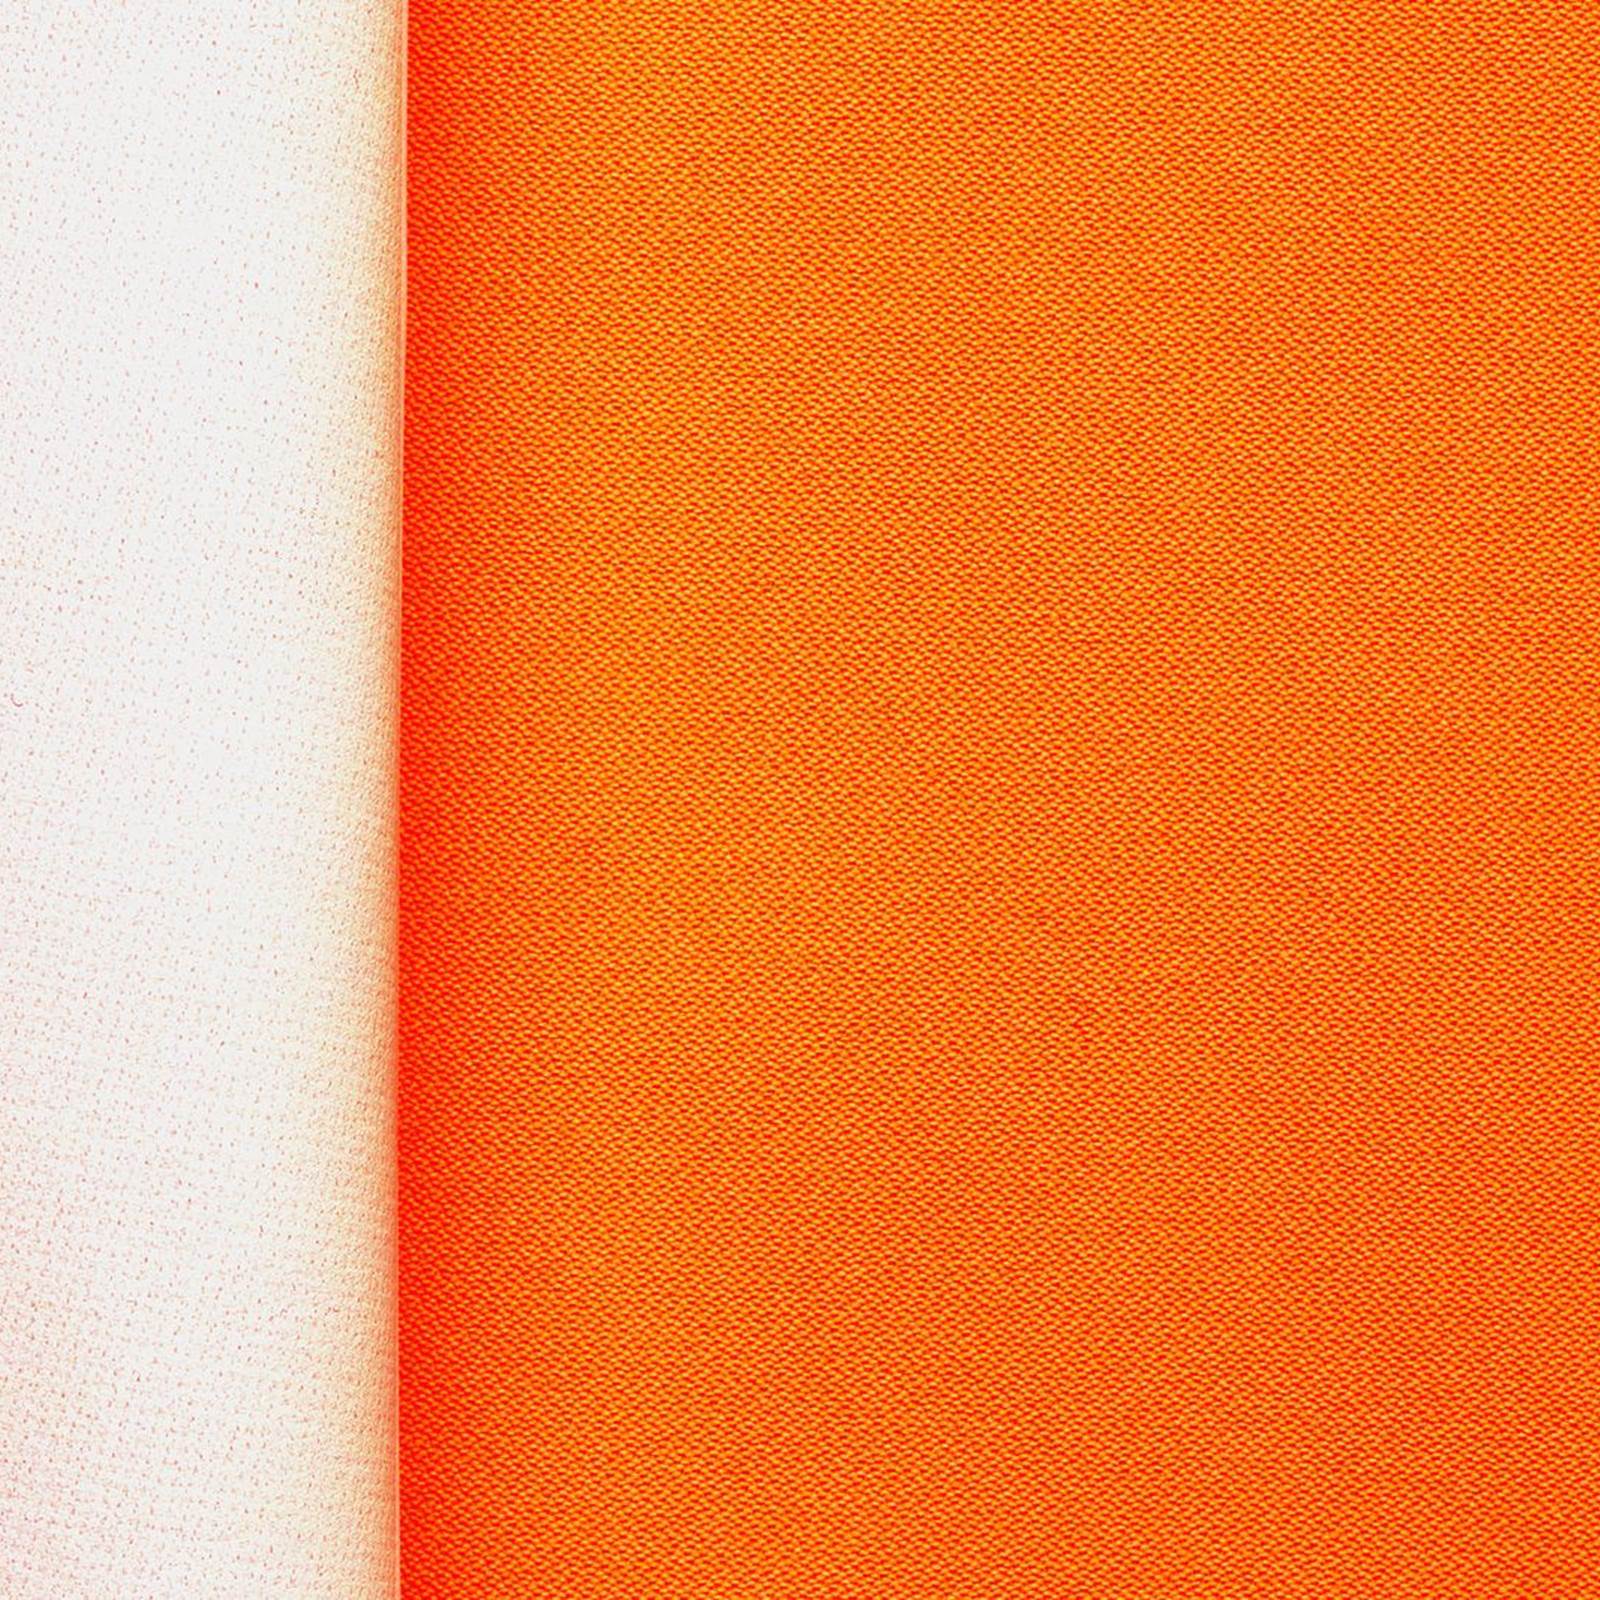 Greta - Tela de exterior laminada – Impermeable, a prueba de viento, transpirable (naranja fluorescente)